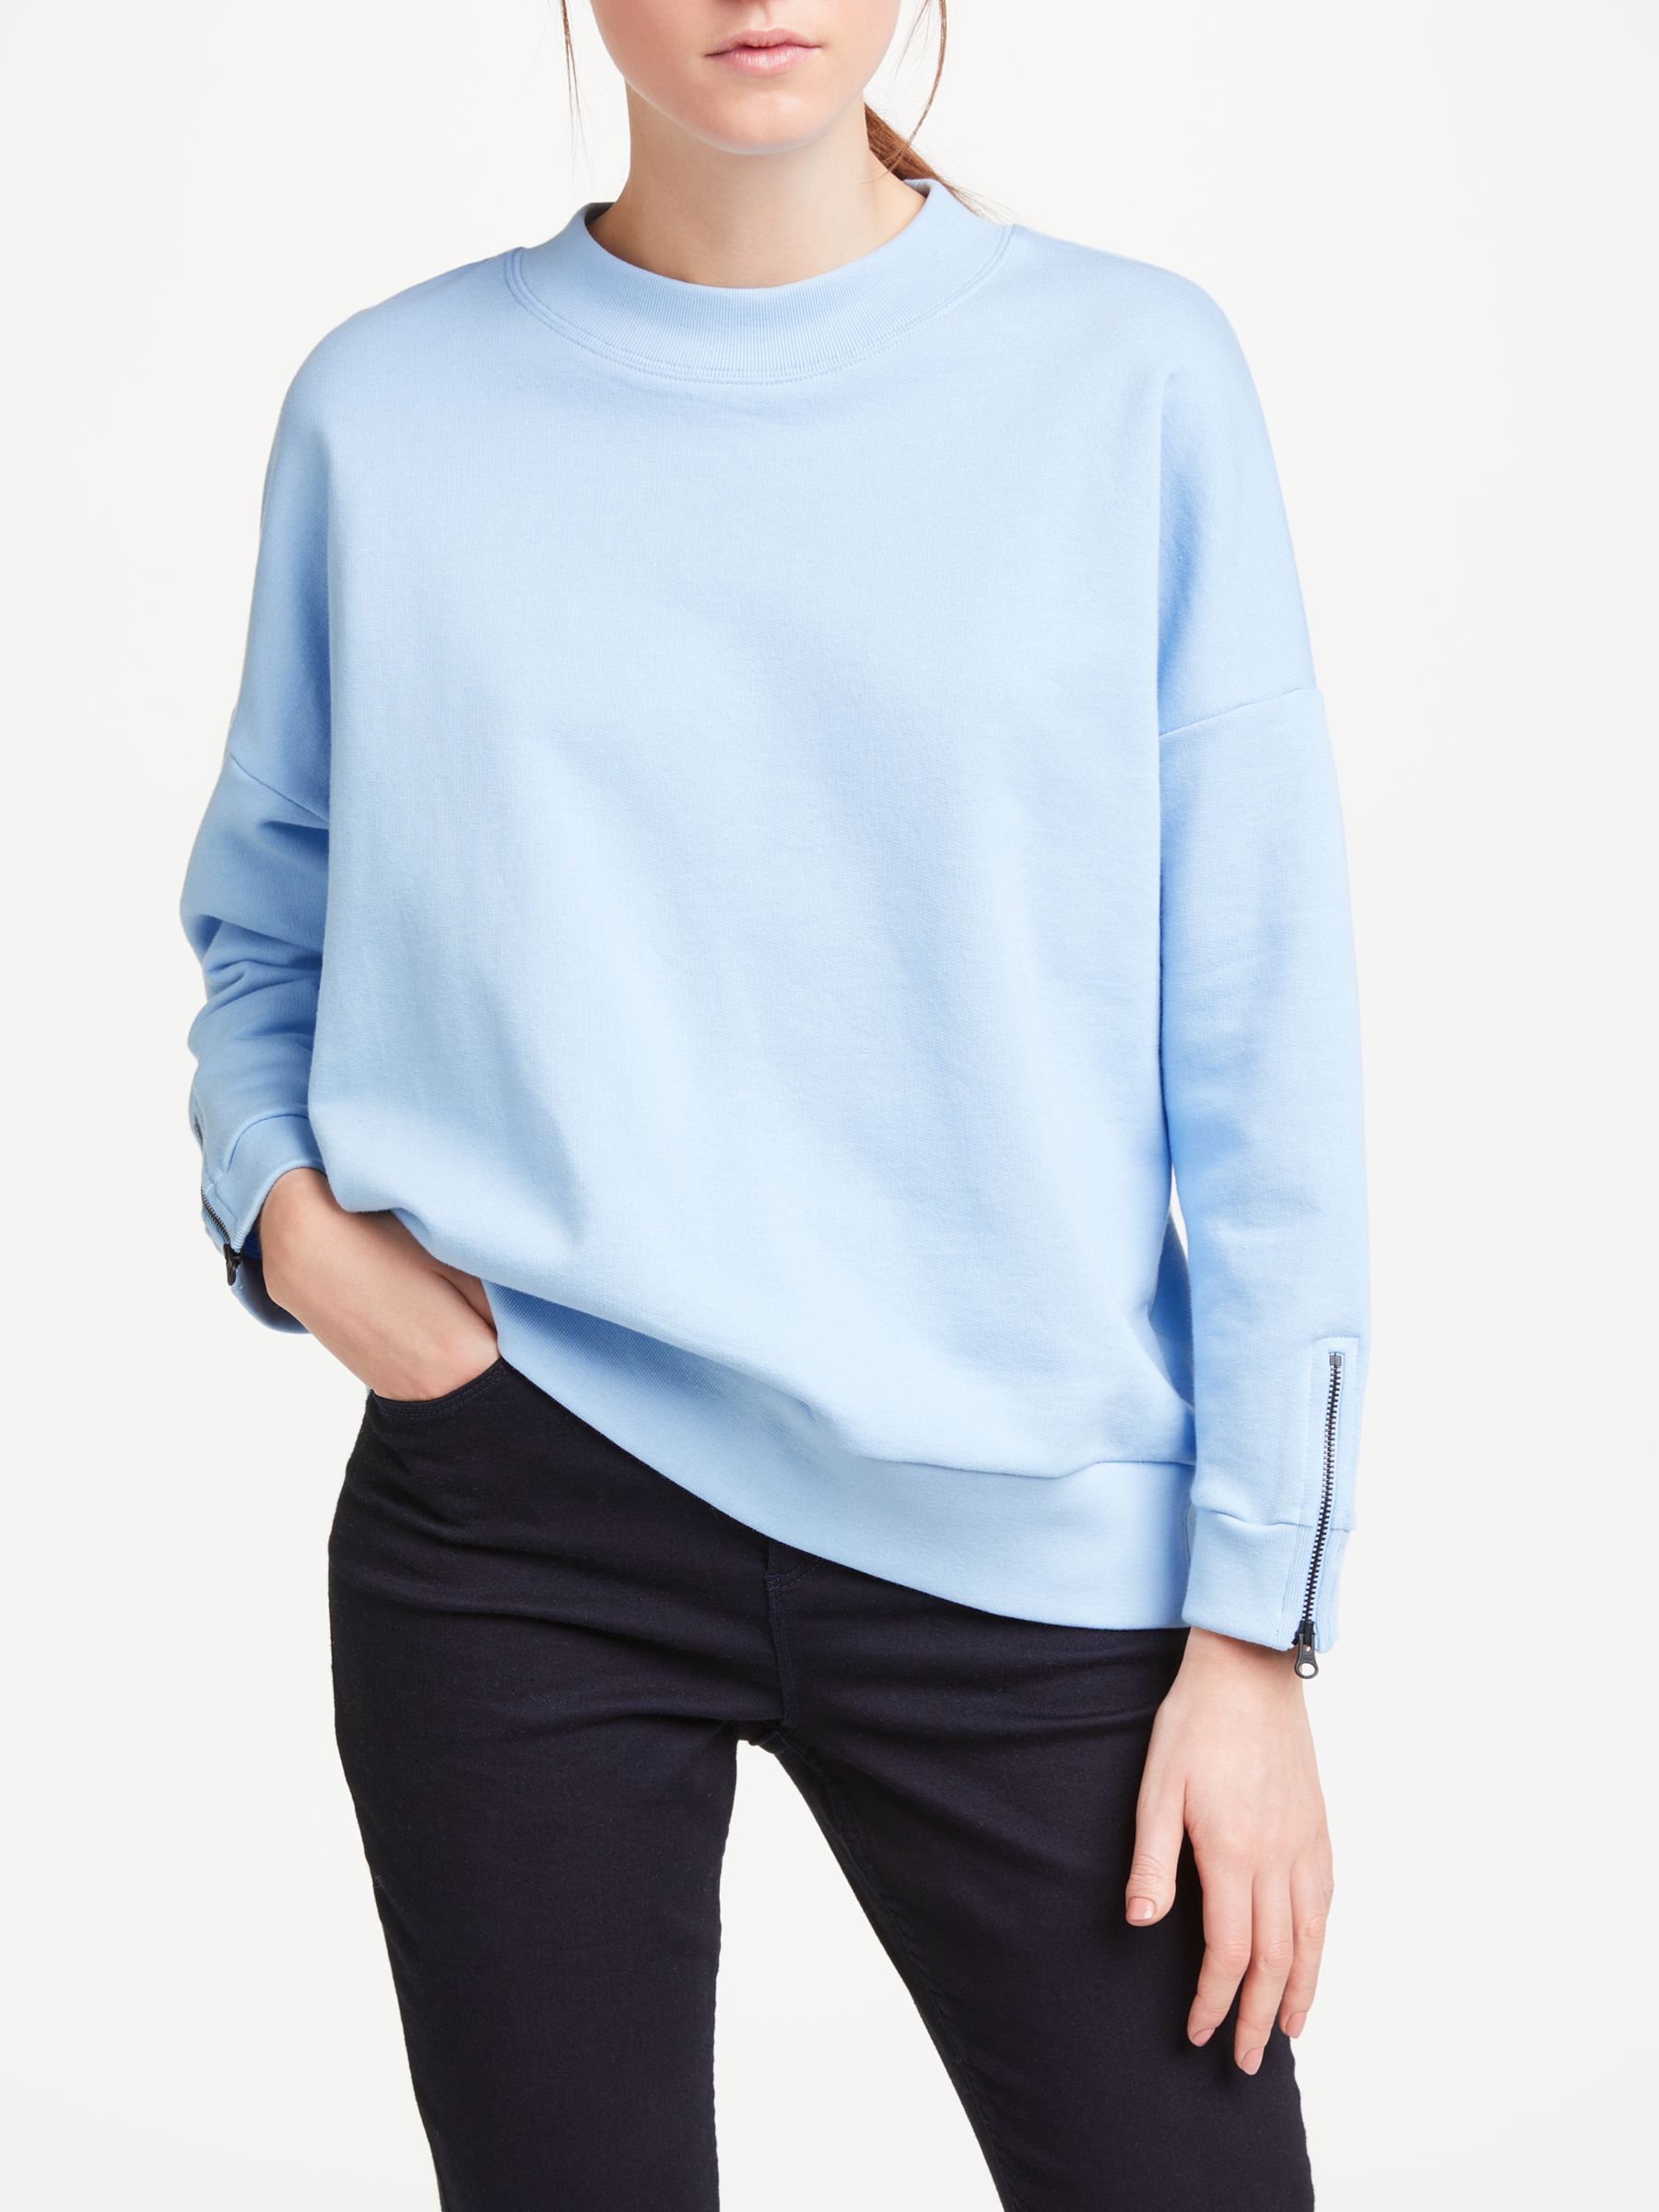 Kin Zip Detail Sweatshirt, Blue, S